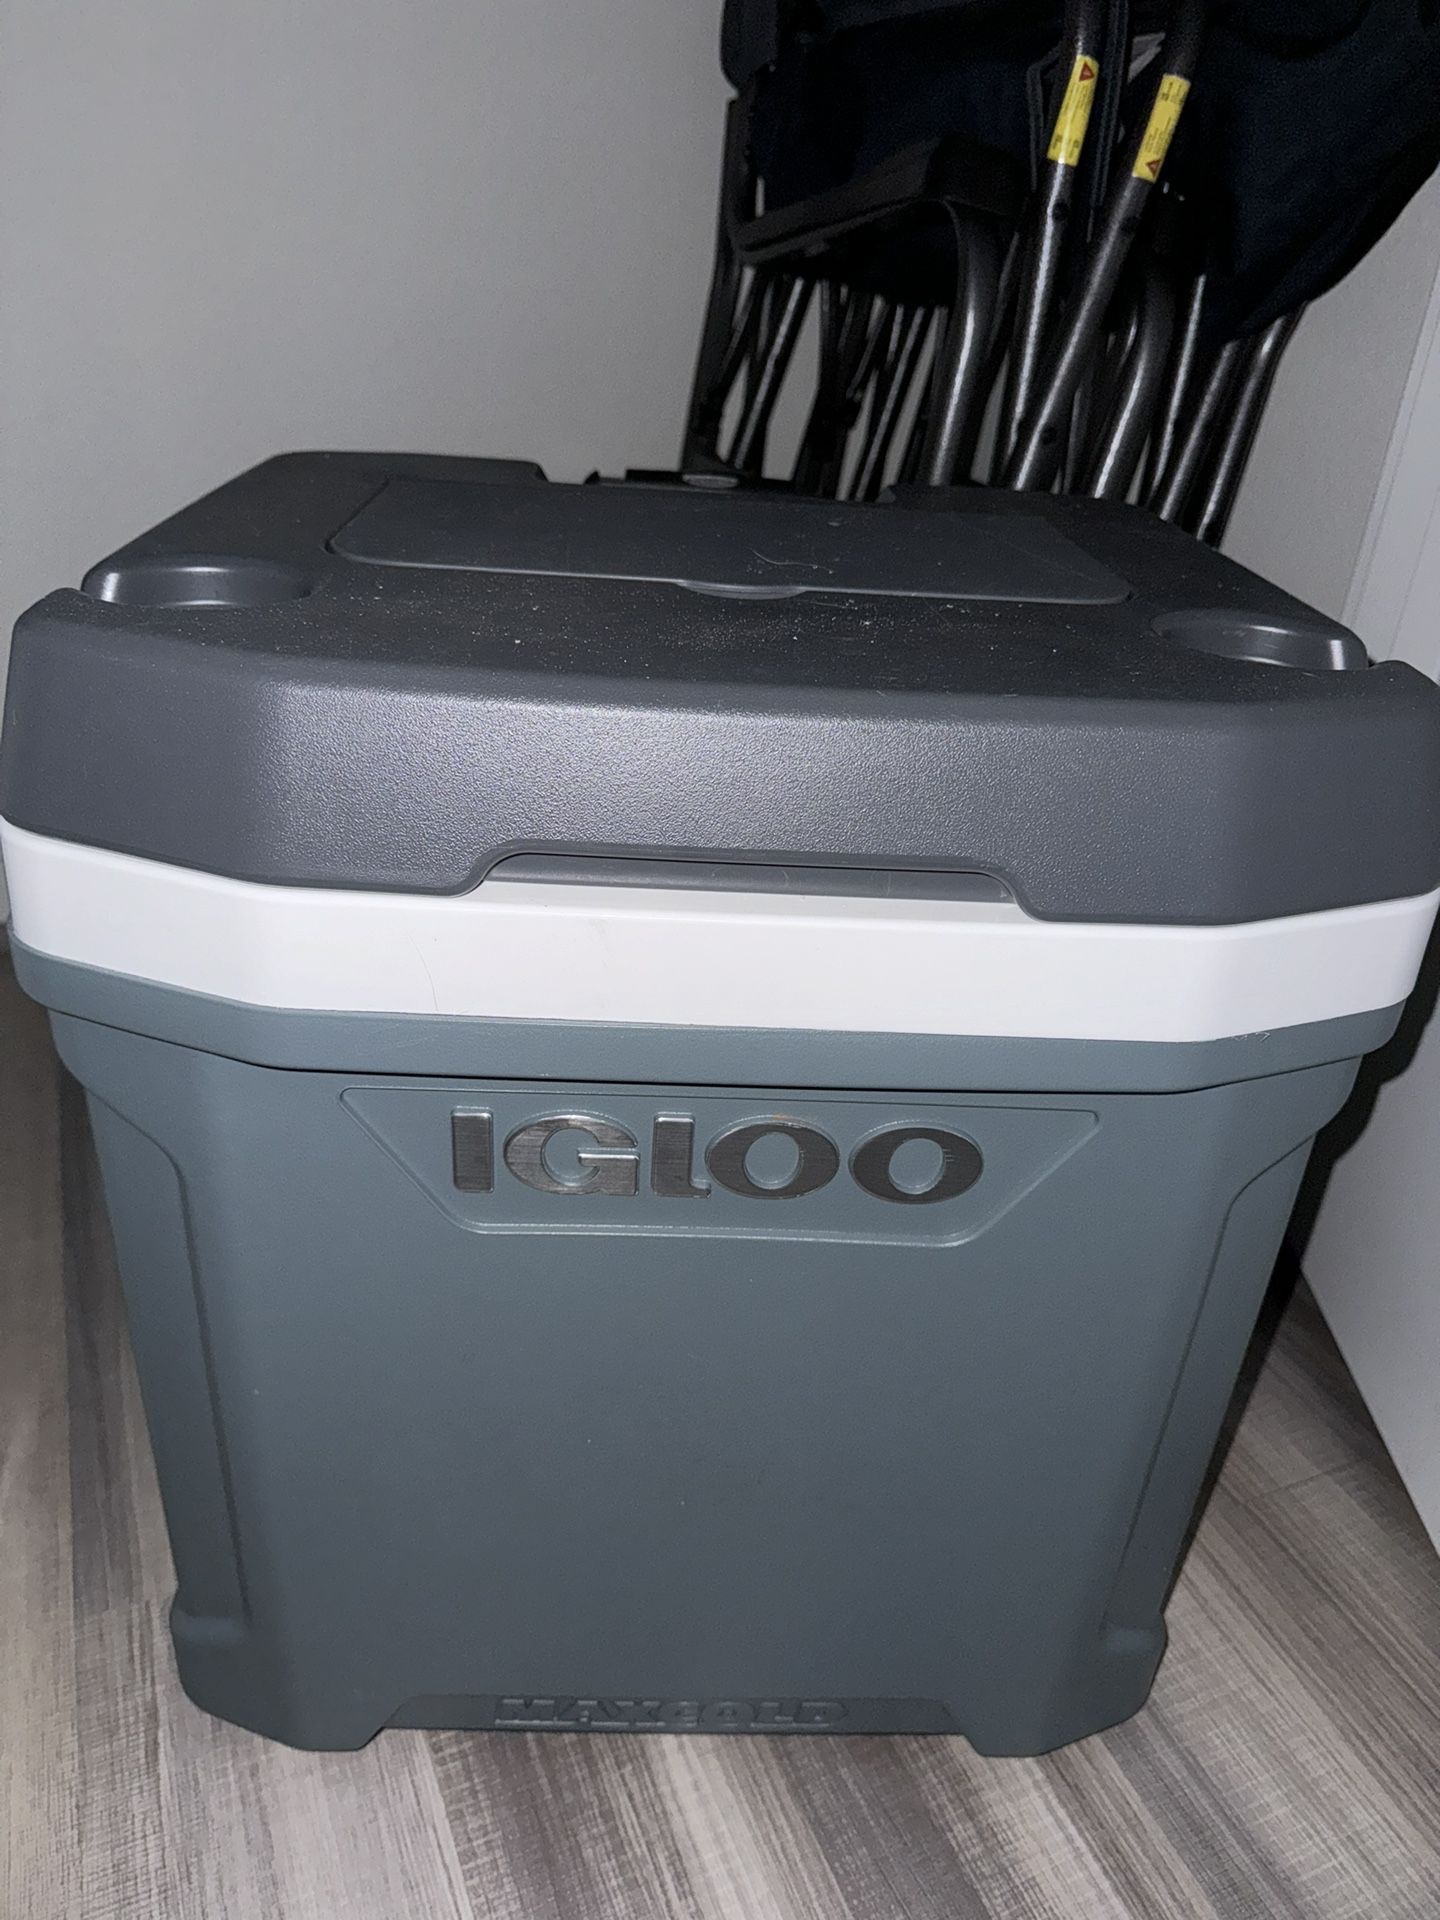 Igloo Cooler